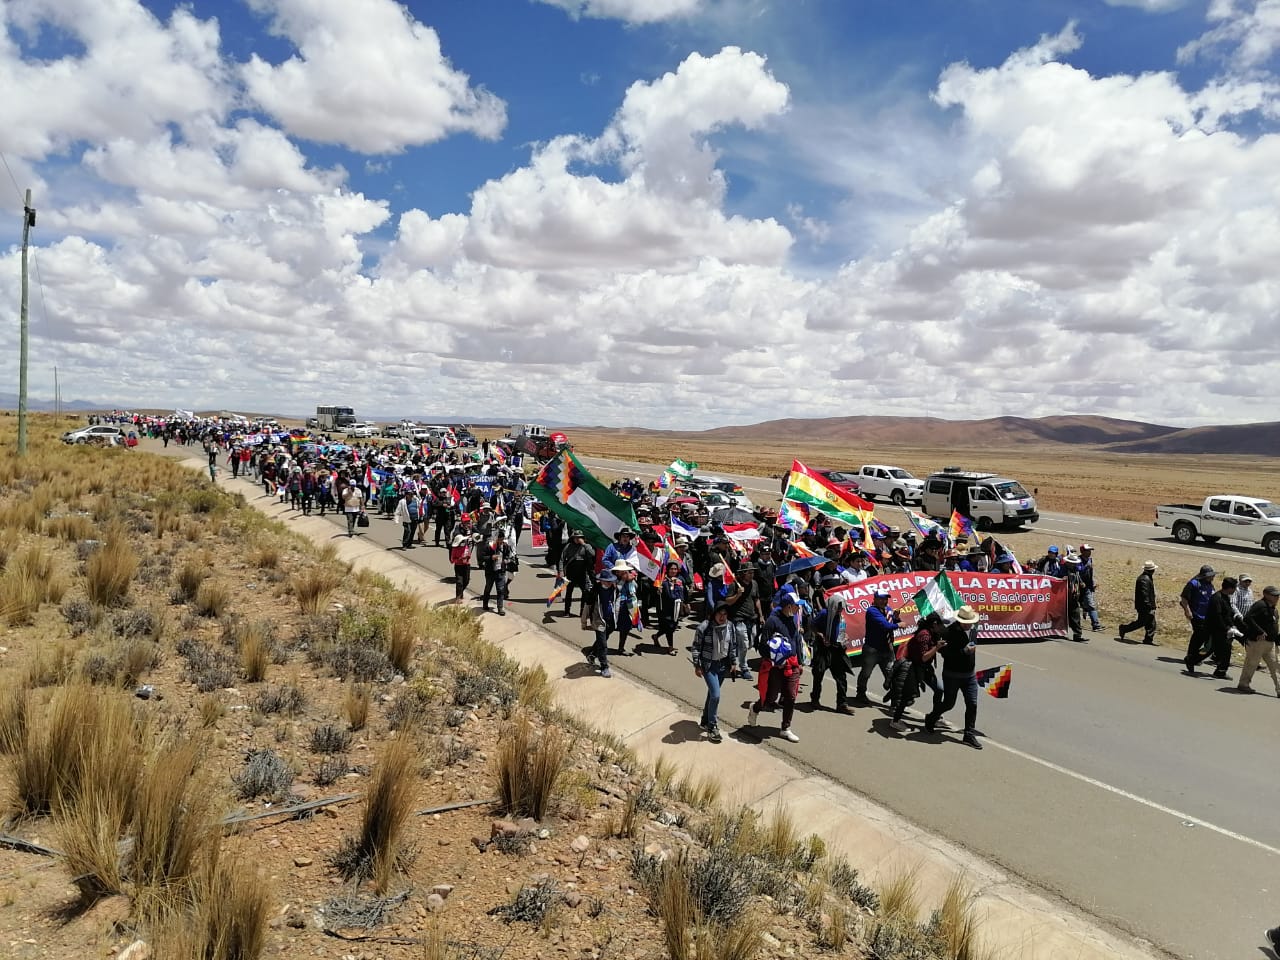 Marcha por la Patria, Bolivia